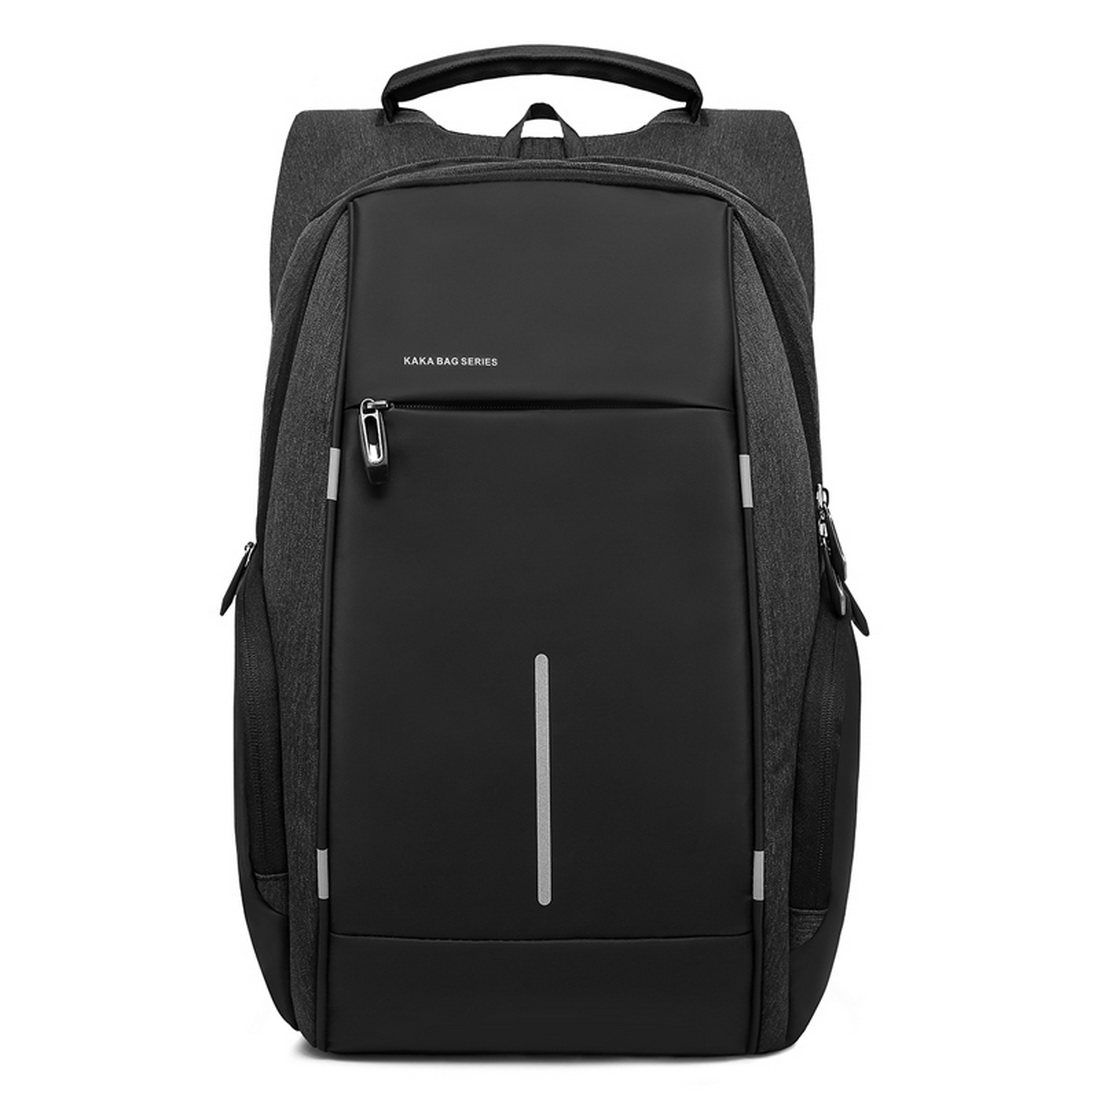 Joymoze Waterproof Oxford Backpack Fashion Casual Laptop Bag for Men and Women Black 847